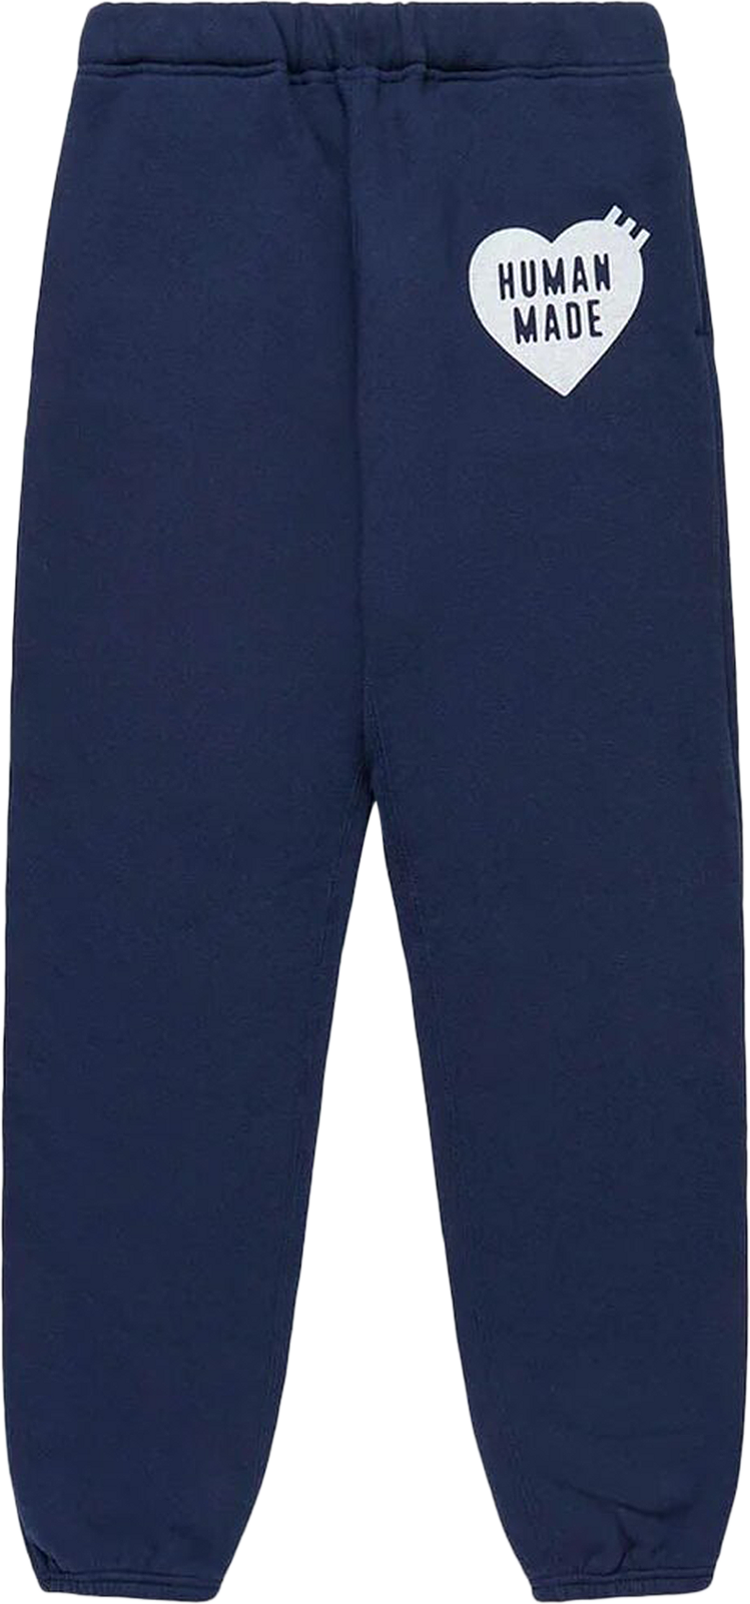 Buy Human Made Sweatpants 'Navy' - HM25PT016 NAVY | GOAT